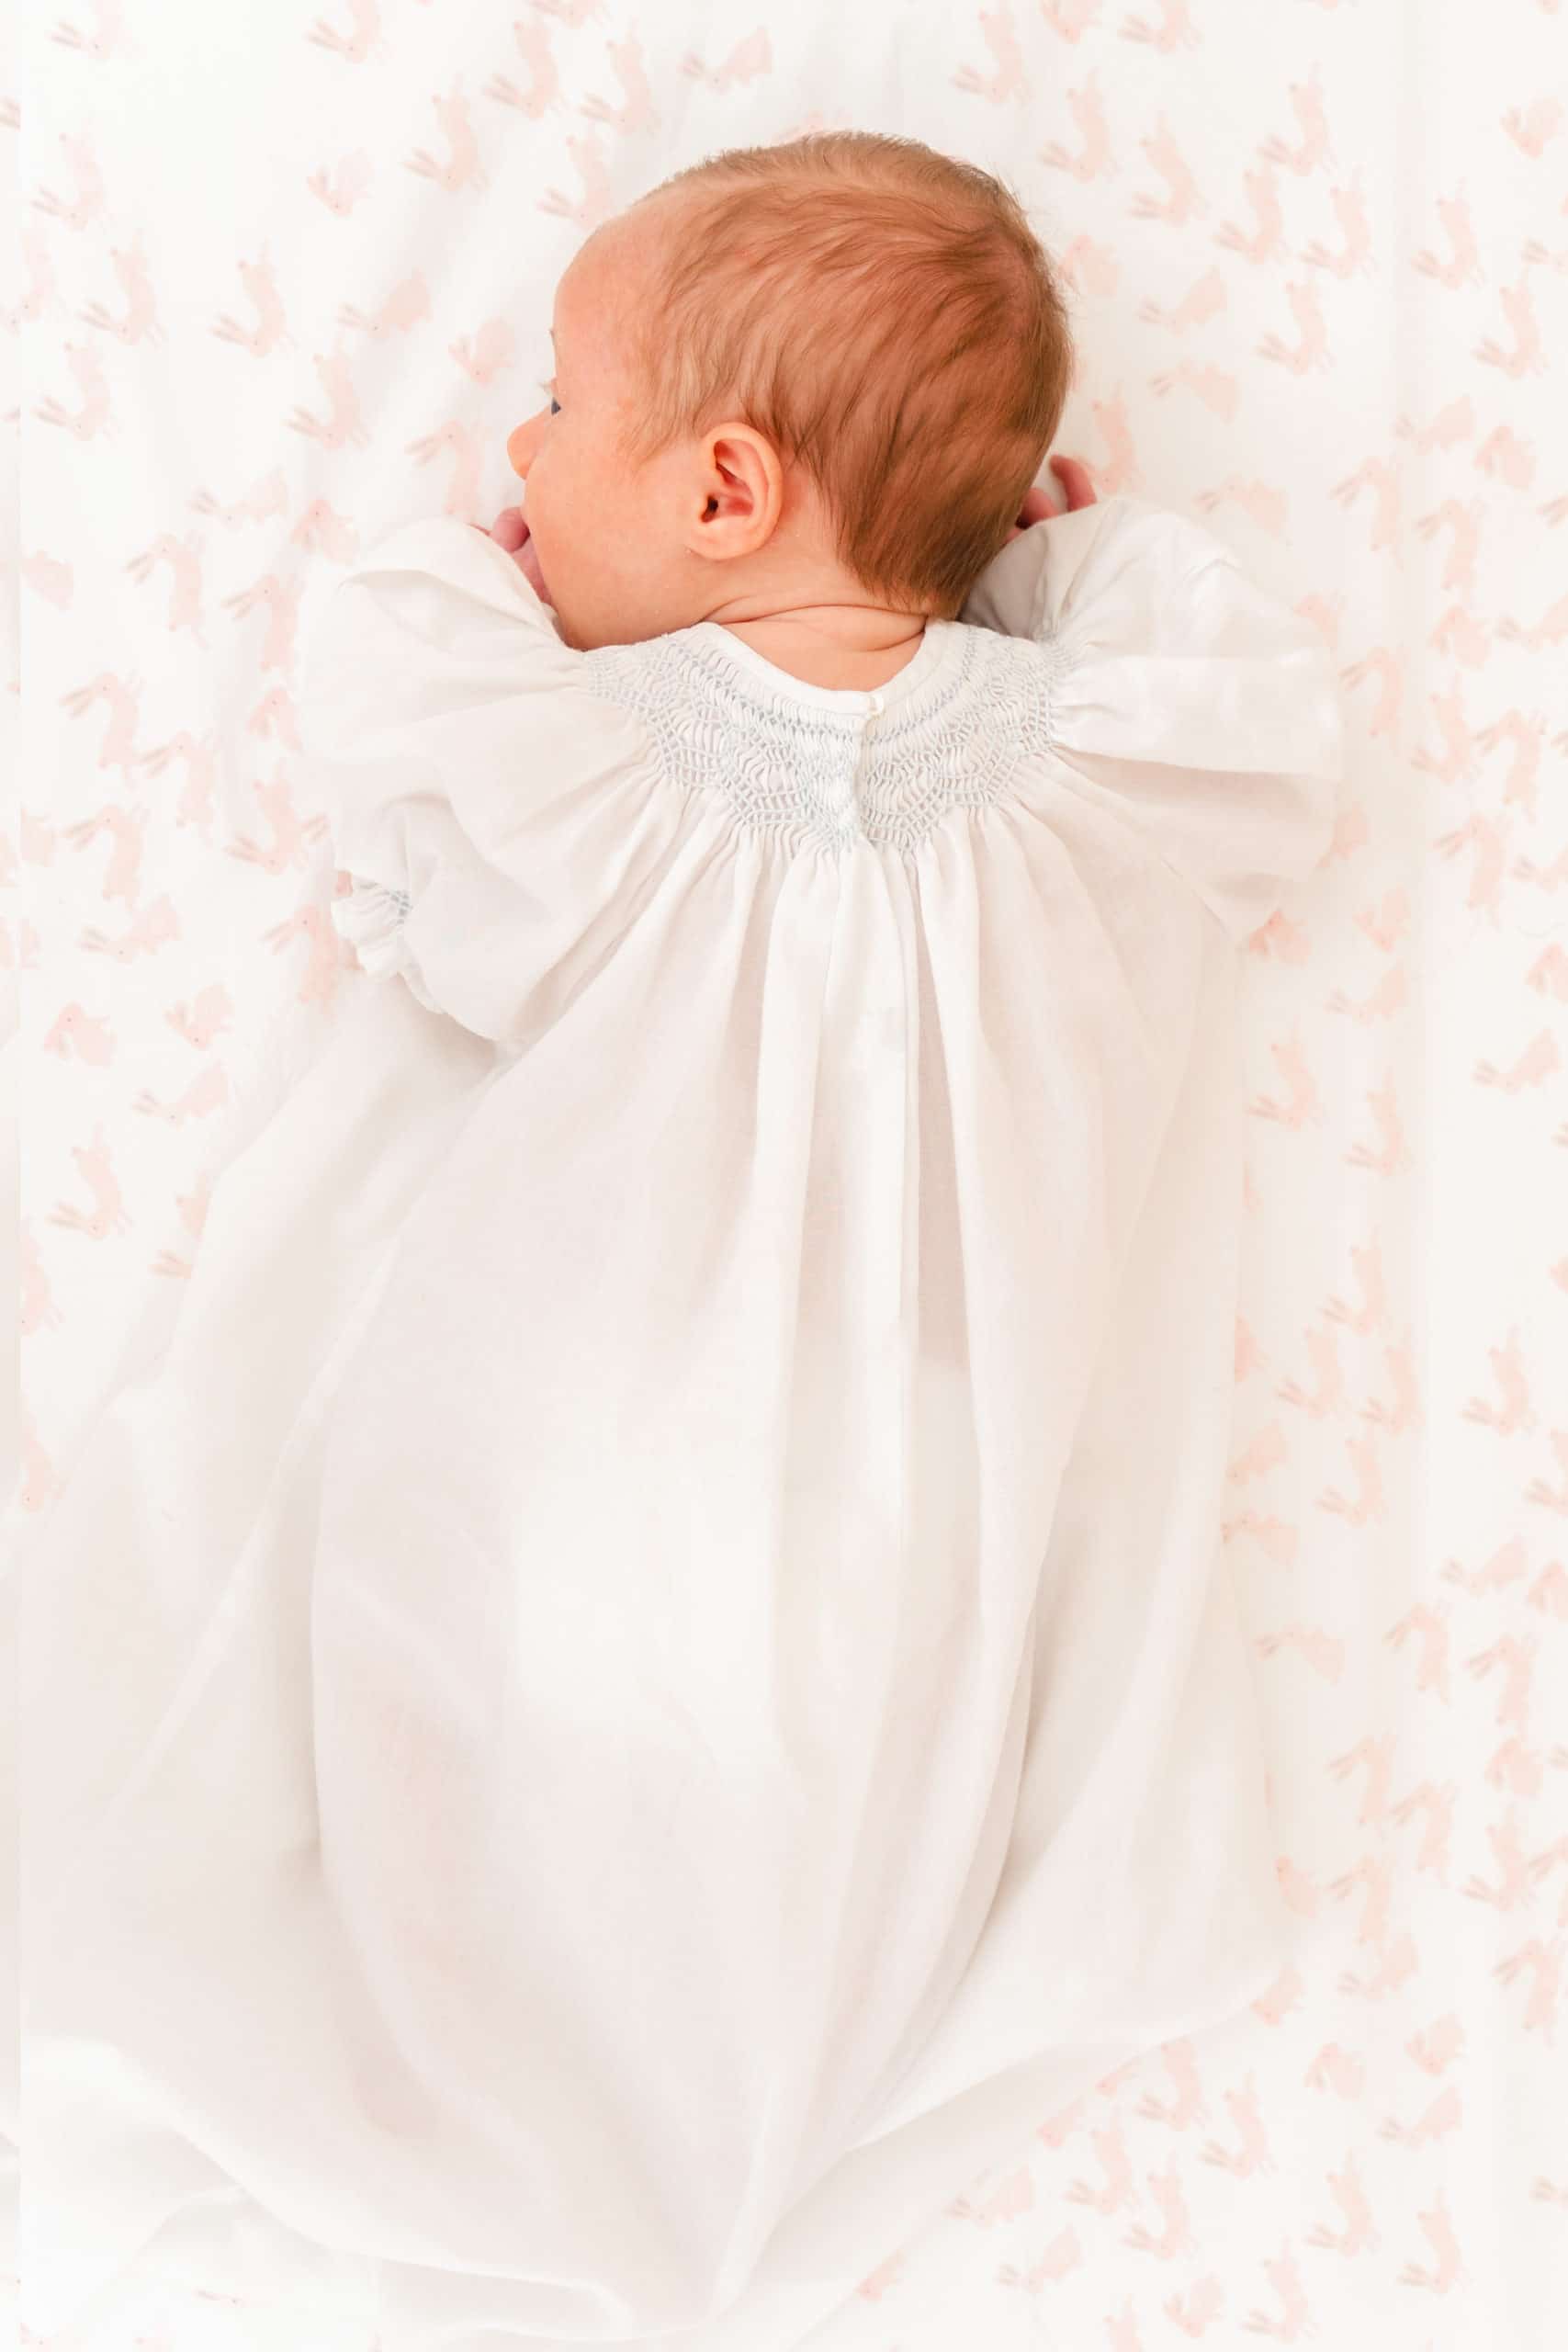 East Tennessee newborn photographer _ newborn in crib